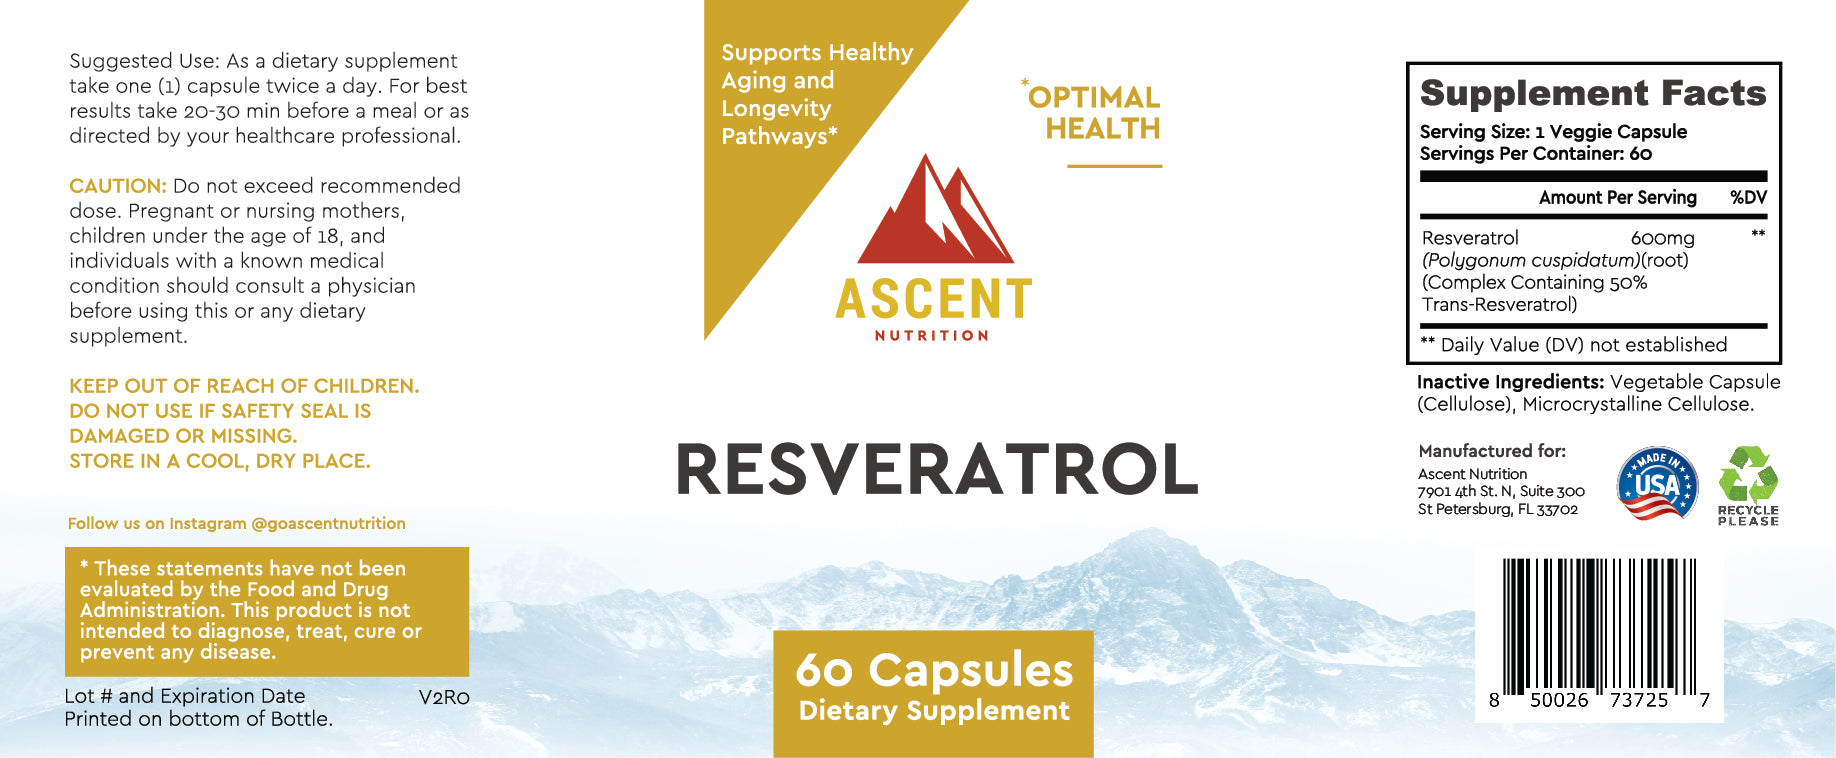 Ascent Nutrition Resveratrol Supplement